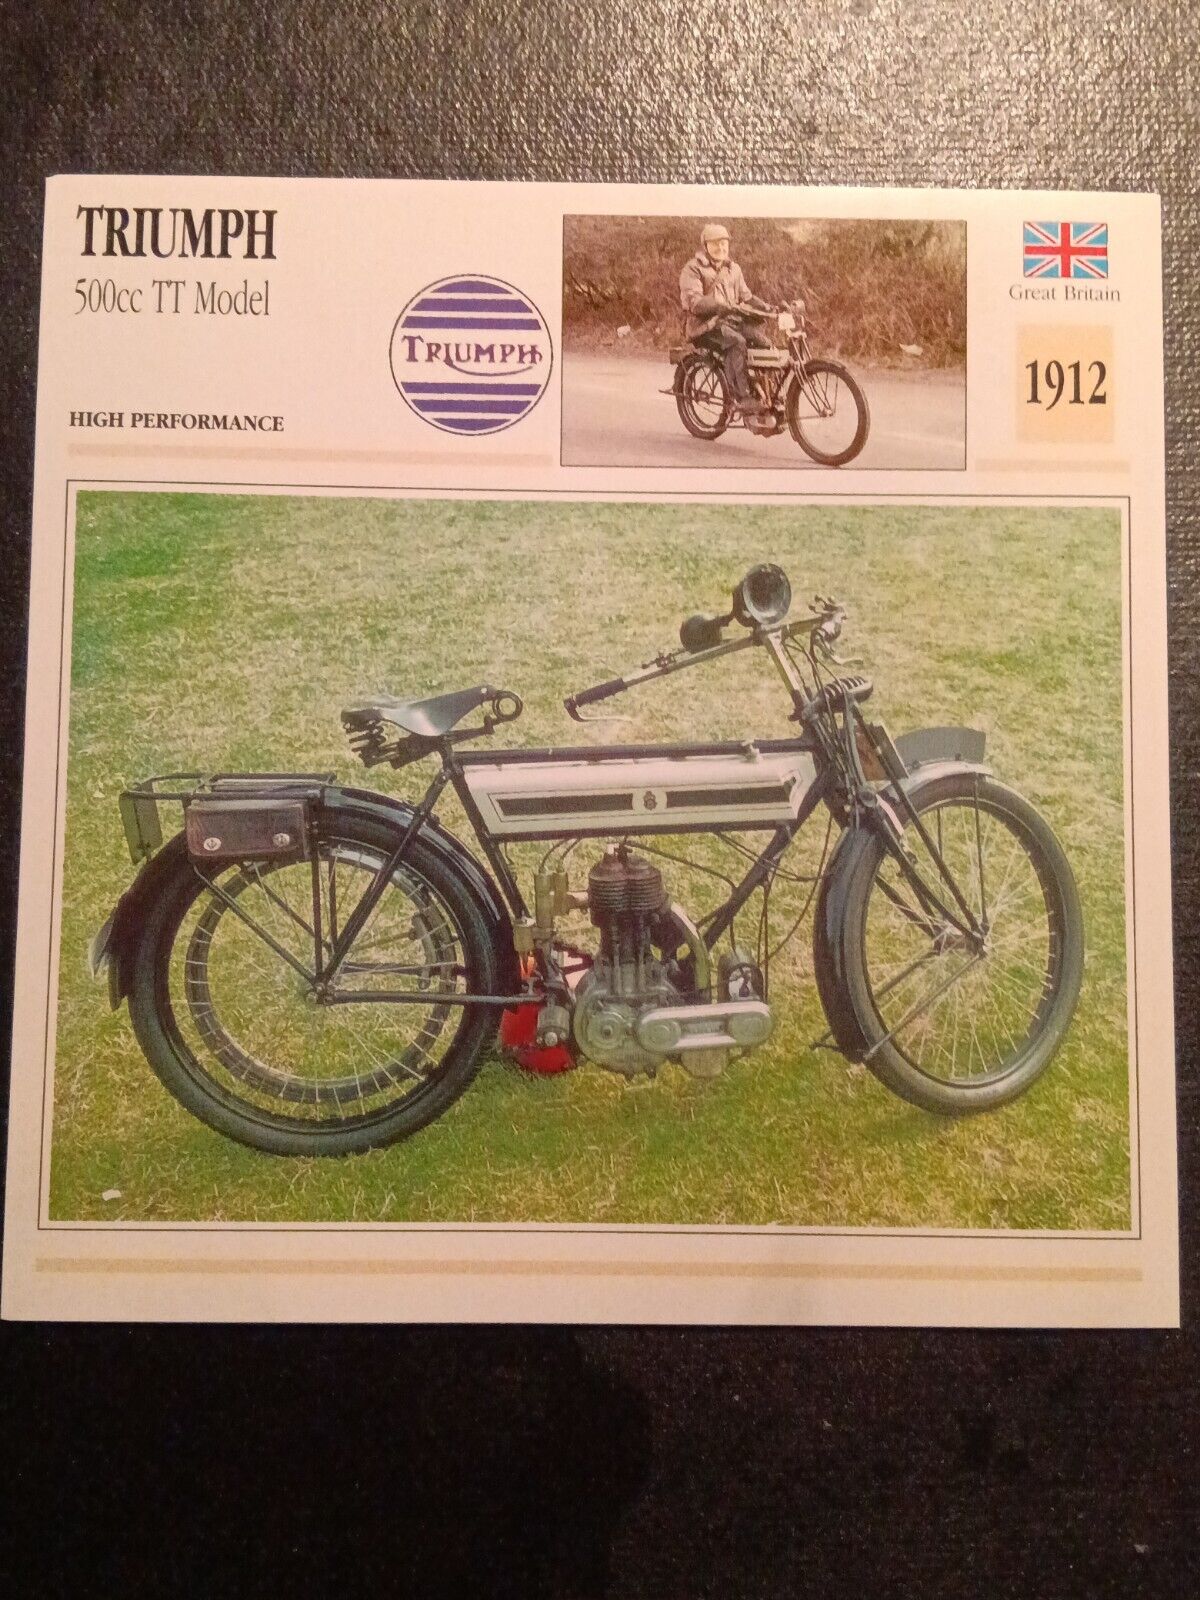 1912 Triumph 500cc TT Model 3.5 hp Tourist Trophy Motorcycle  Spec Card New